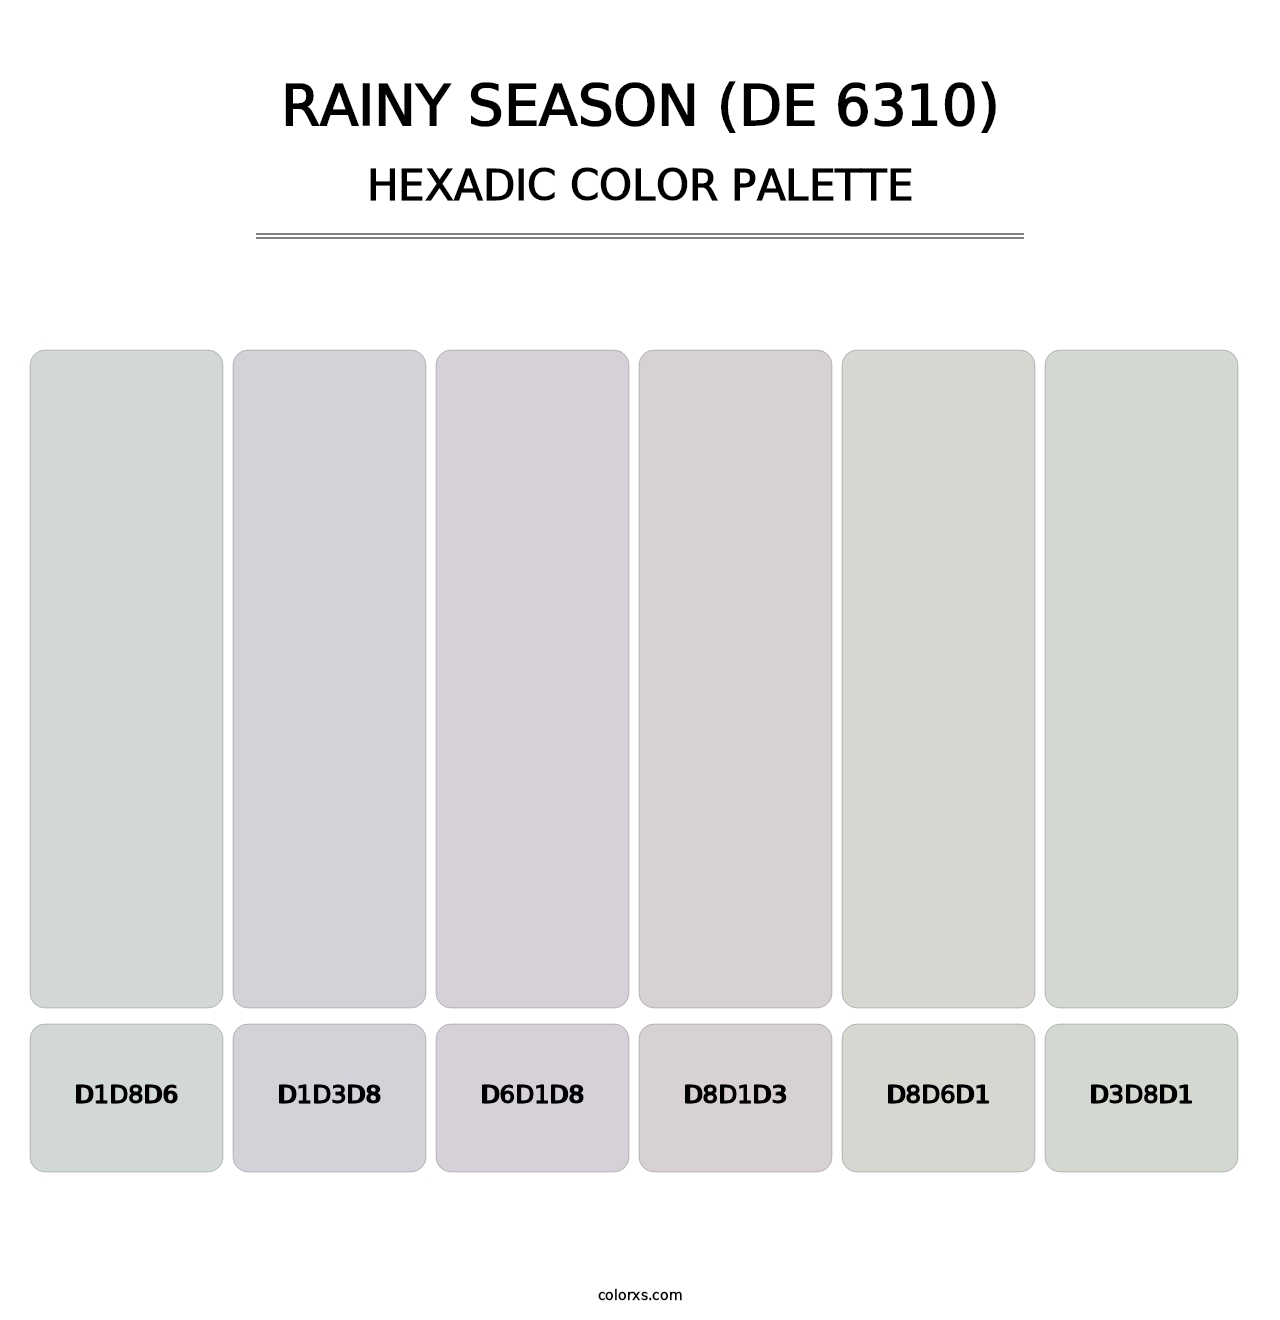 Rainy Season (DE 6310) - Hexadic Color Palette